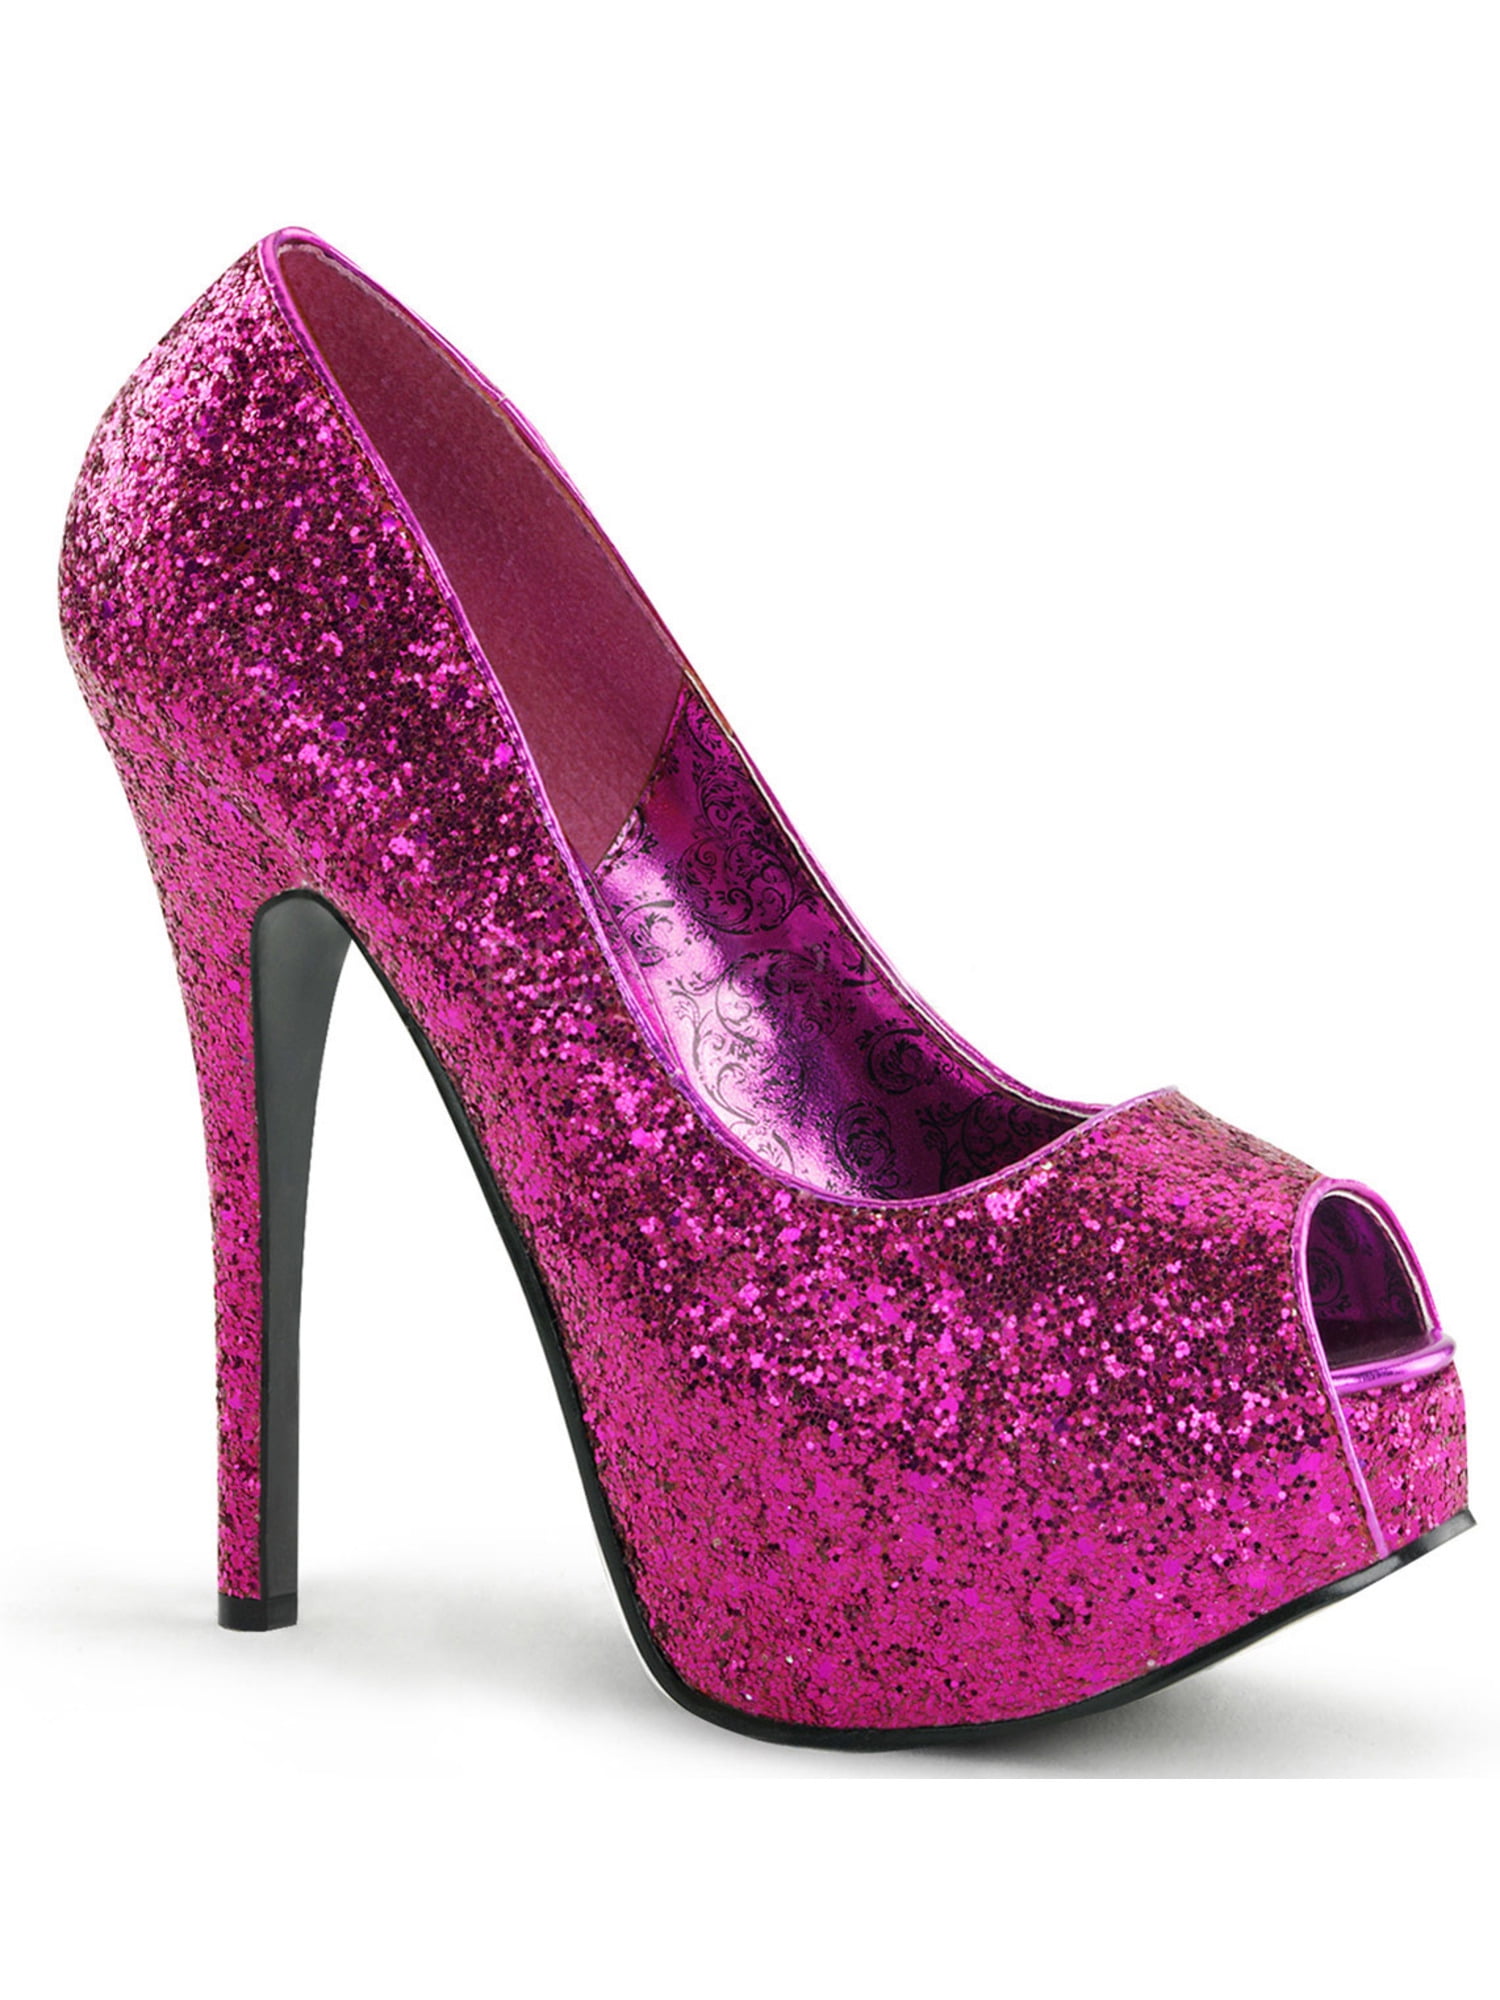 Augusta Sportswear - womens hot pink peep toe glitter pumps sparkly ...